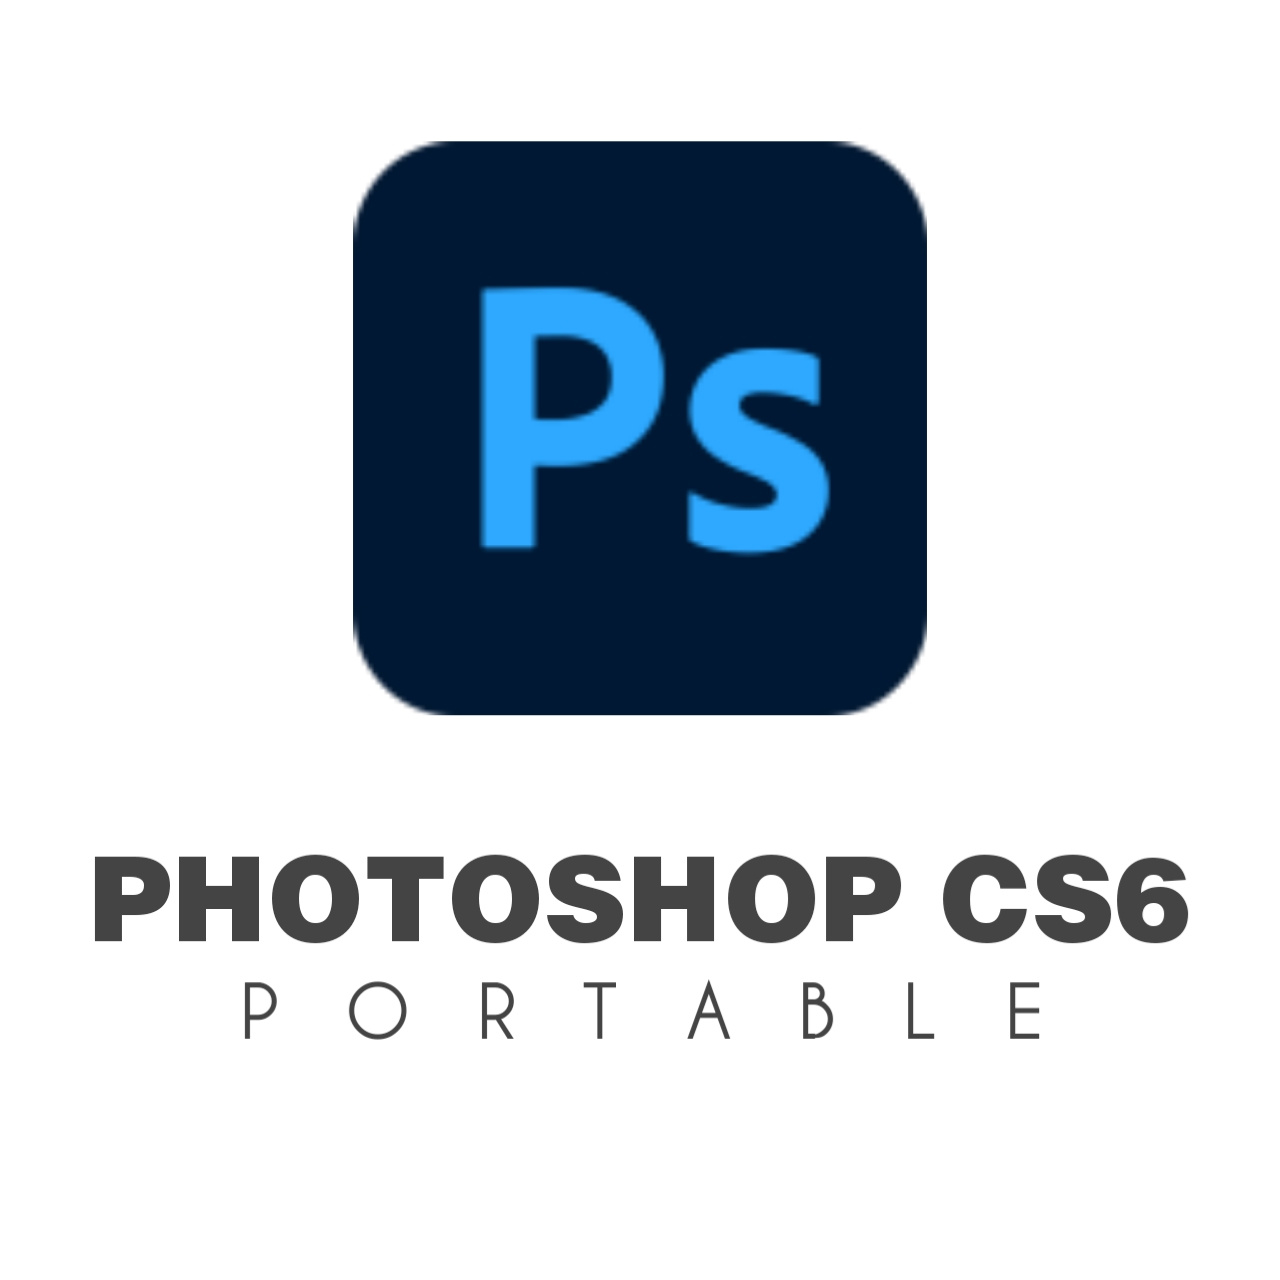 photoshop portable